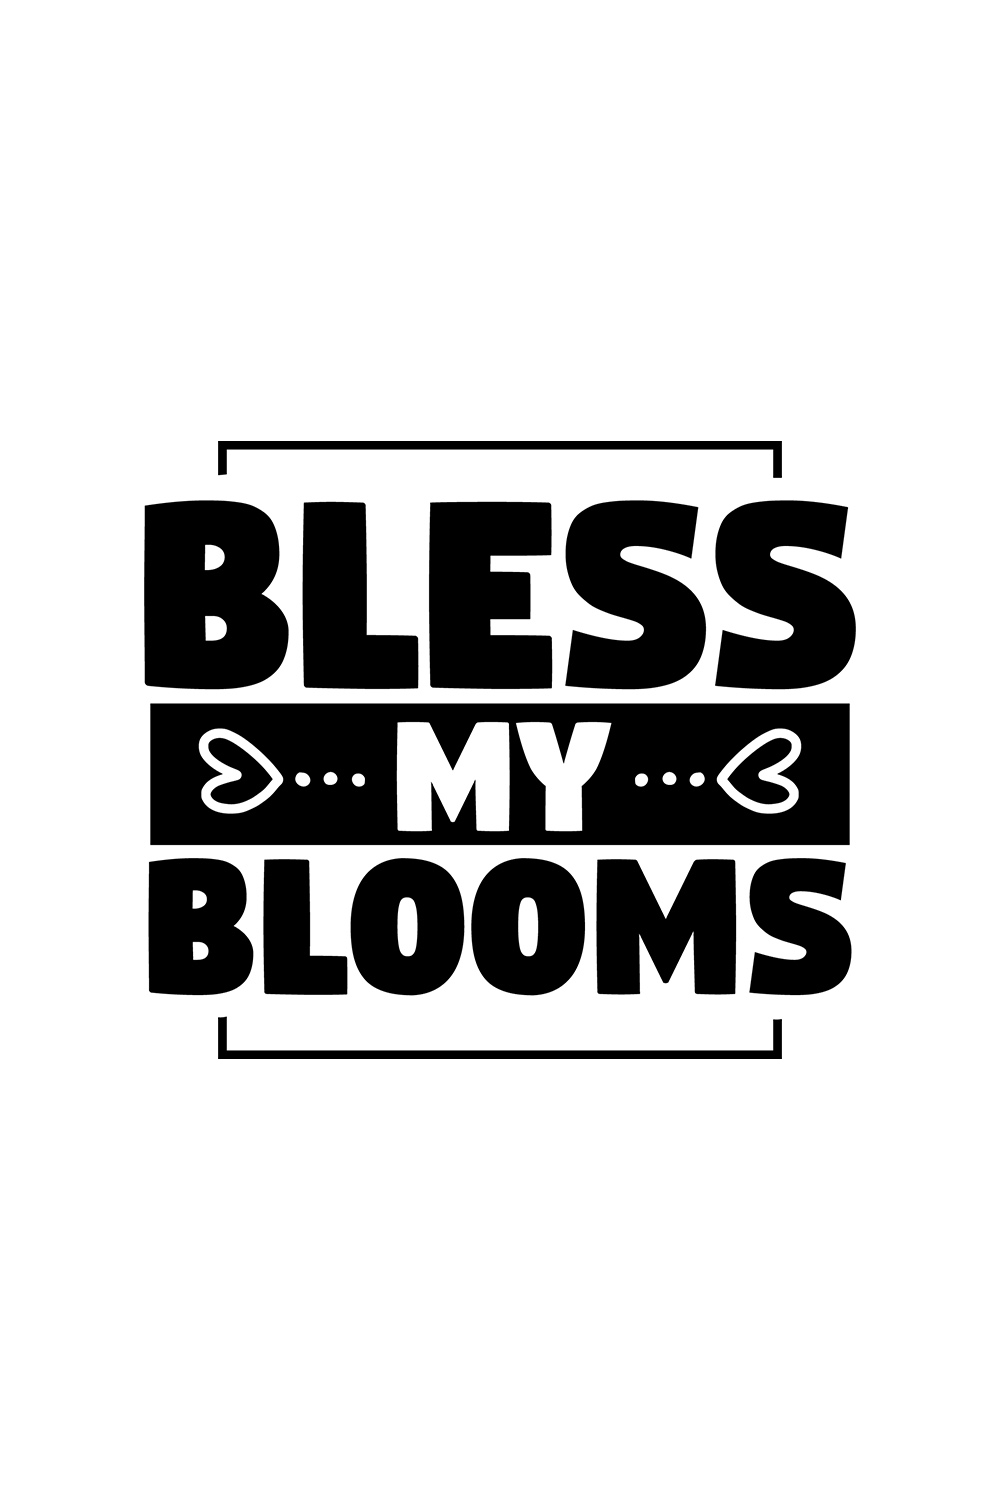 Bless My Blooms SVG Design pinterest image.